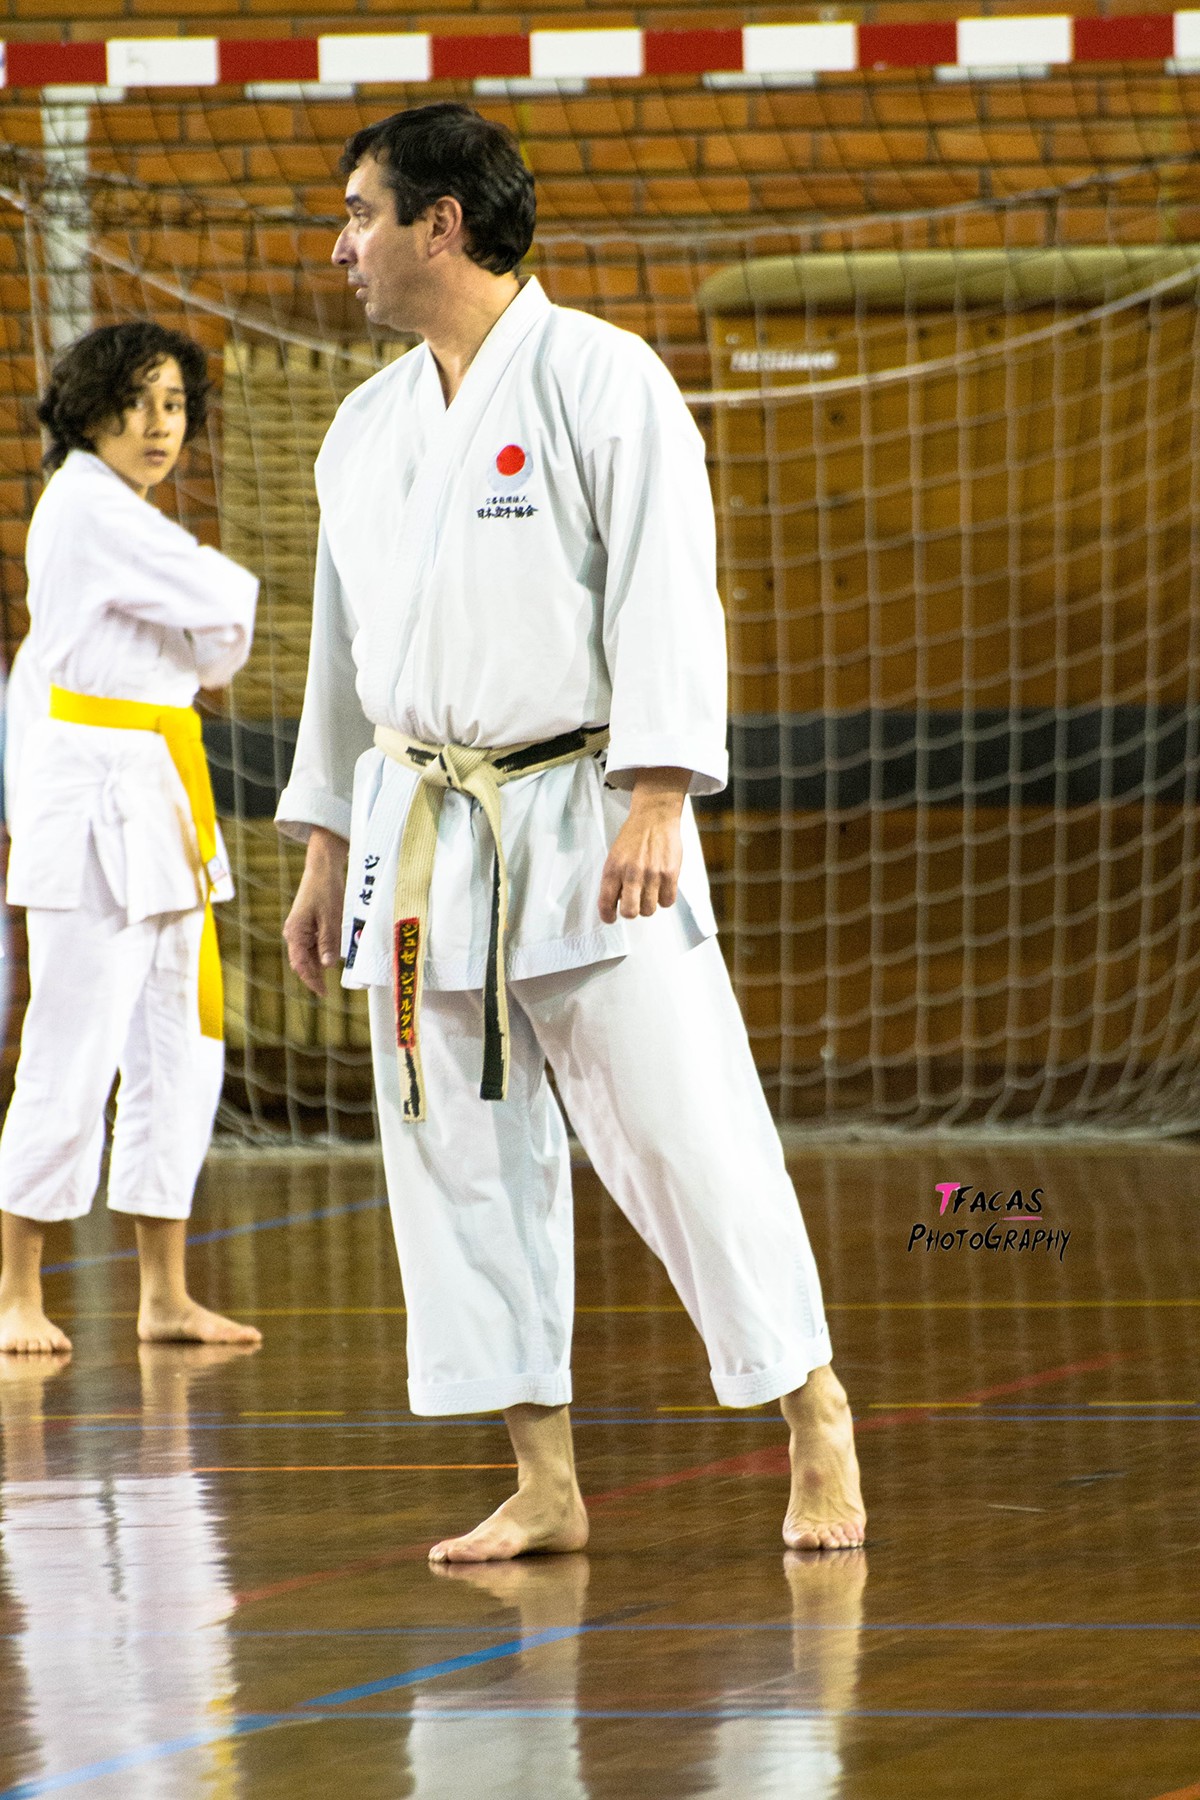 TFacas Photography karate JKA Desporto